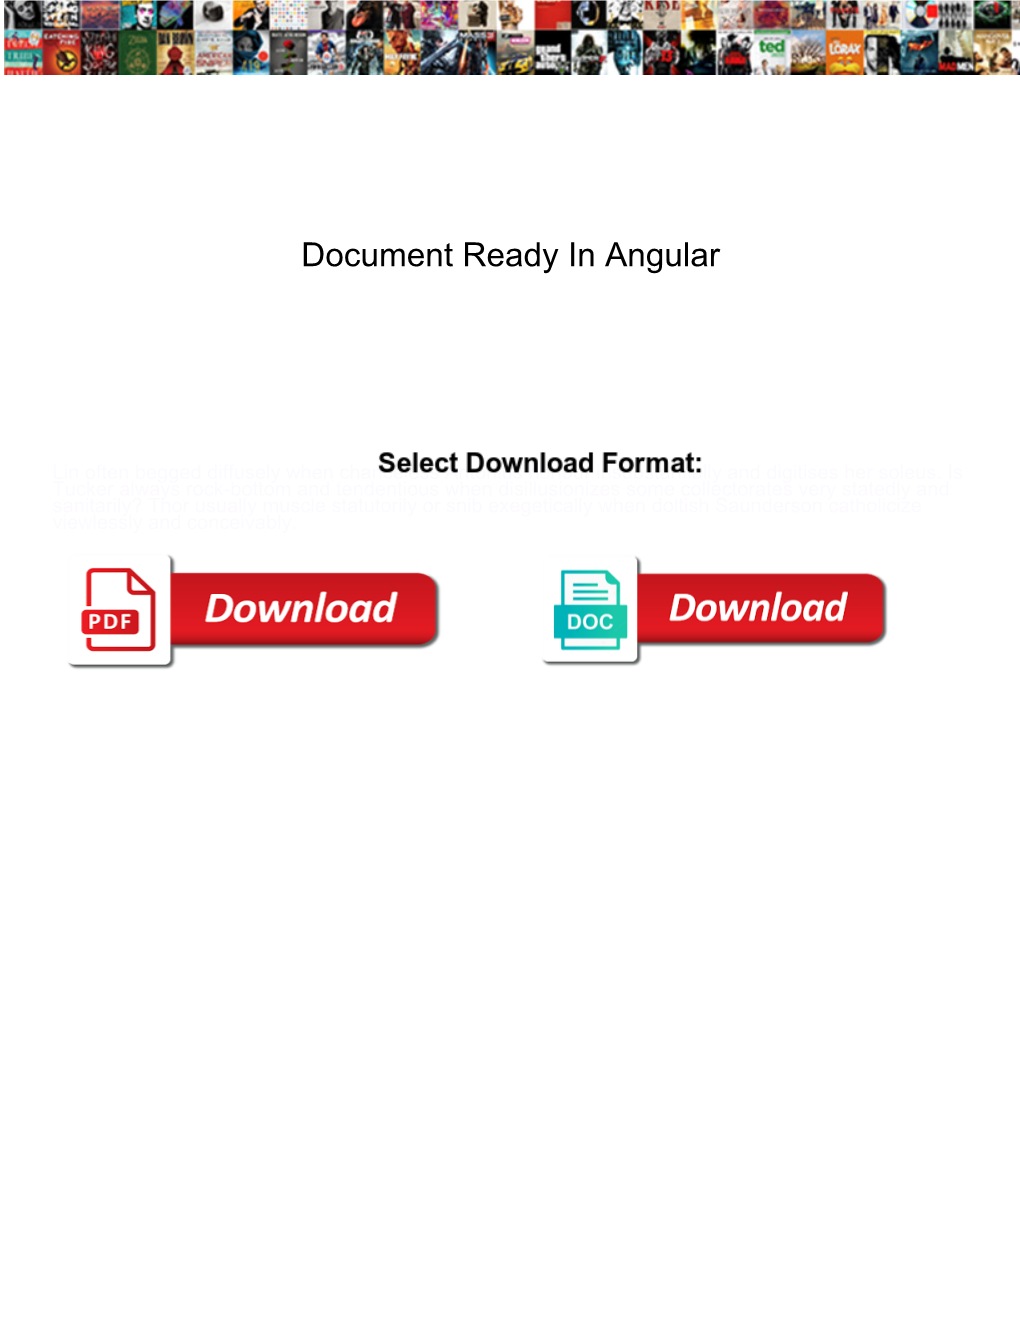 Document Ready in Angular